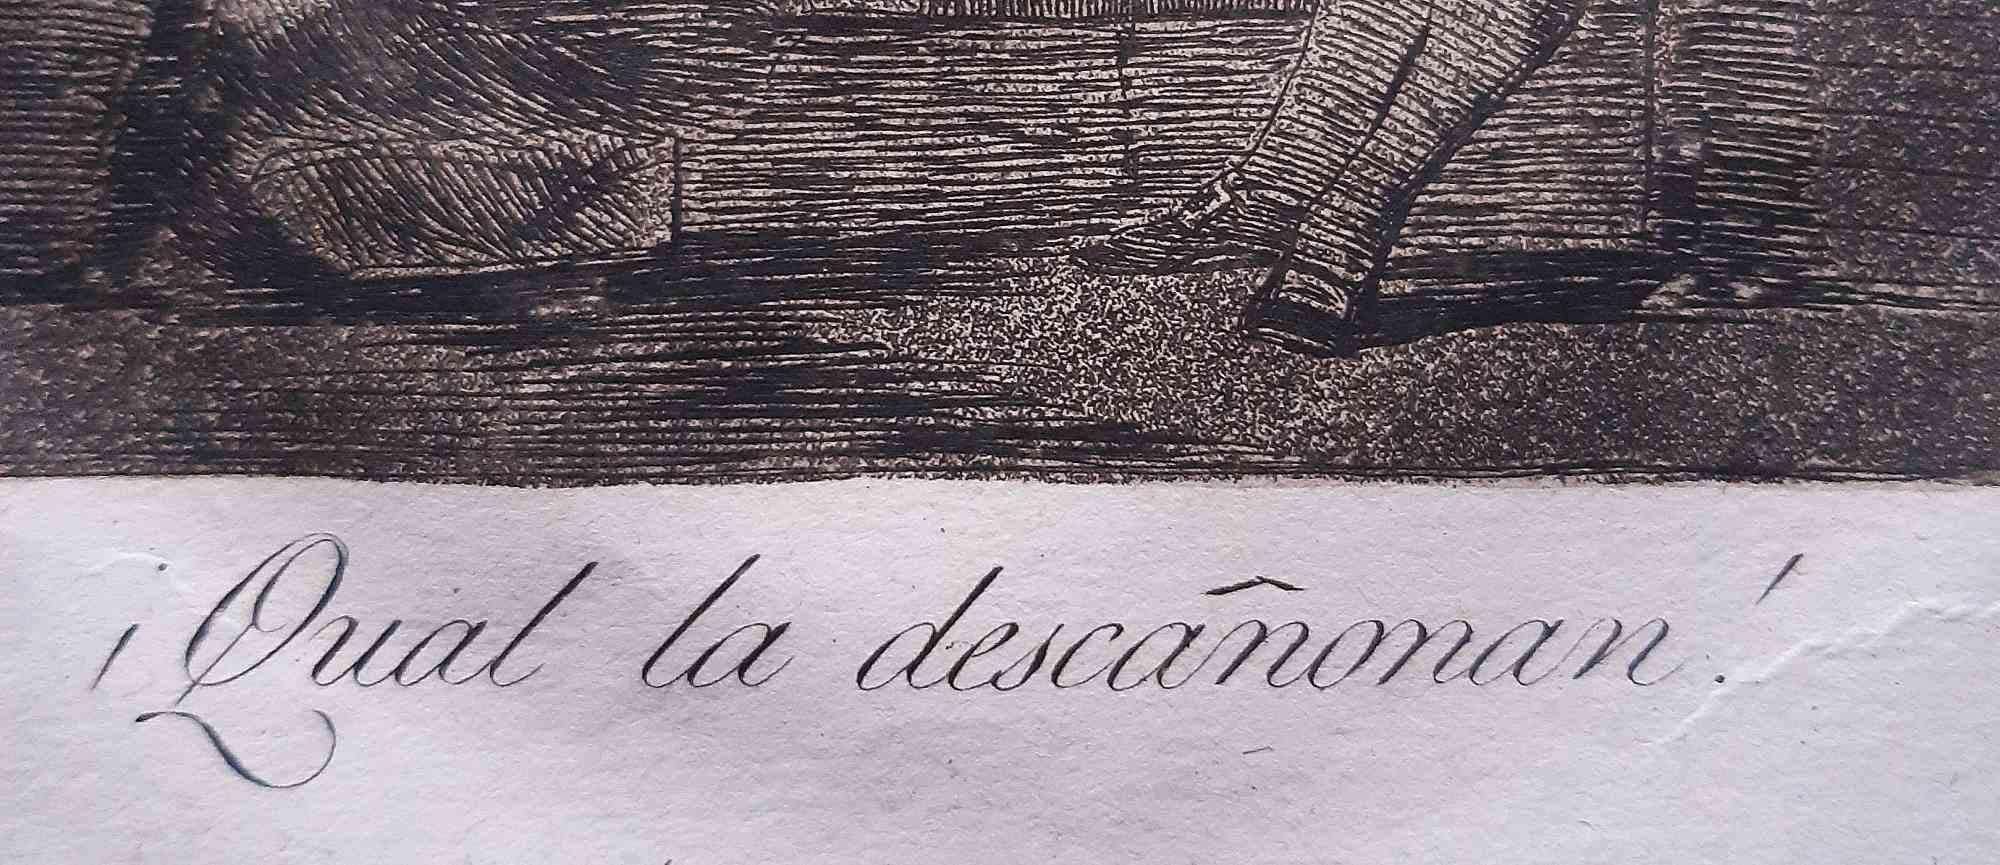 Qual la Descañona de Los Caprichos - Gravure de F. Goya - 1799 - Moderne Print par Francisco Goya